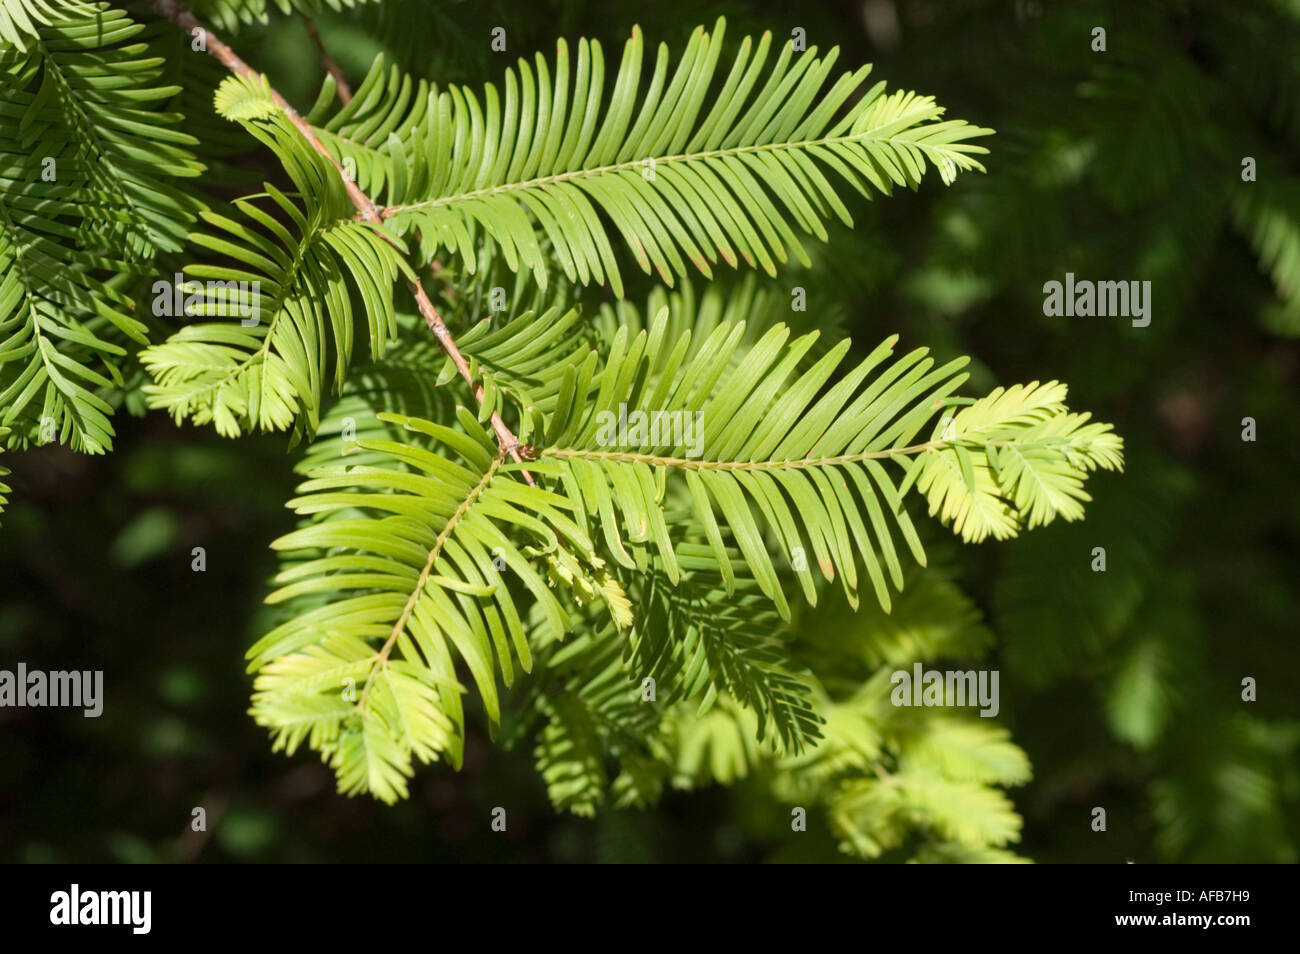 Leaves of Dawn Redwood tree Taxodiaceae Metasequoia glyptostroboides ...